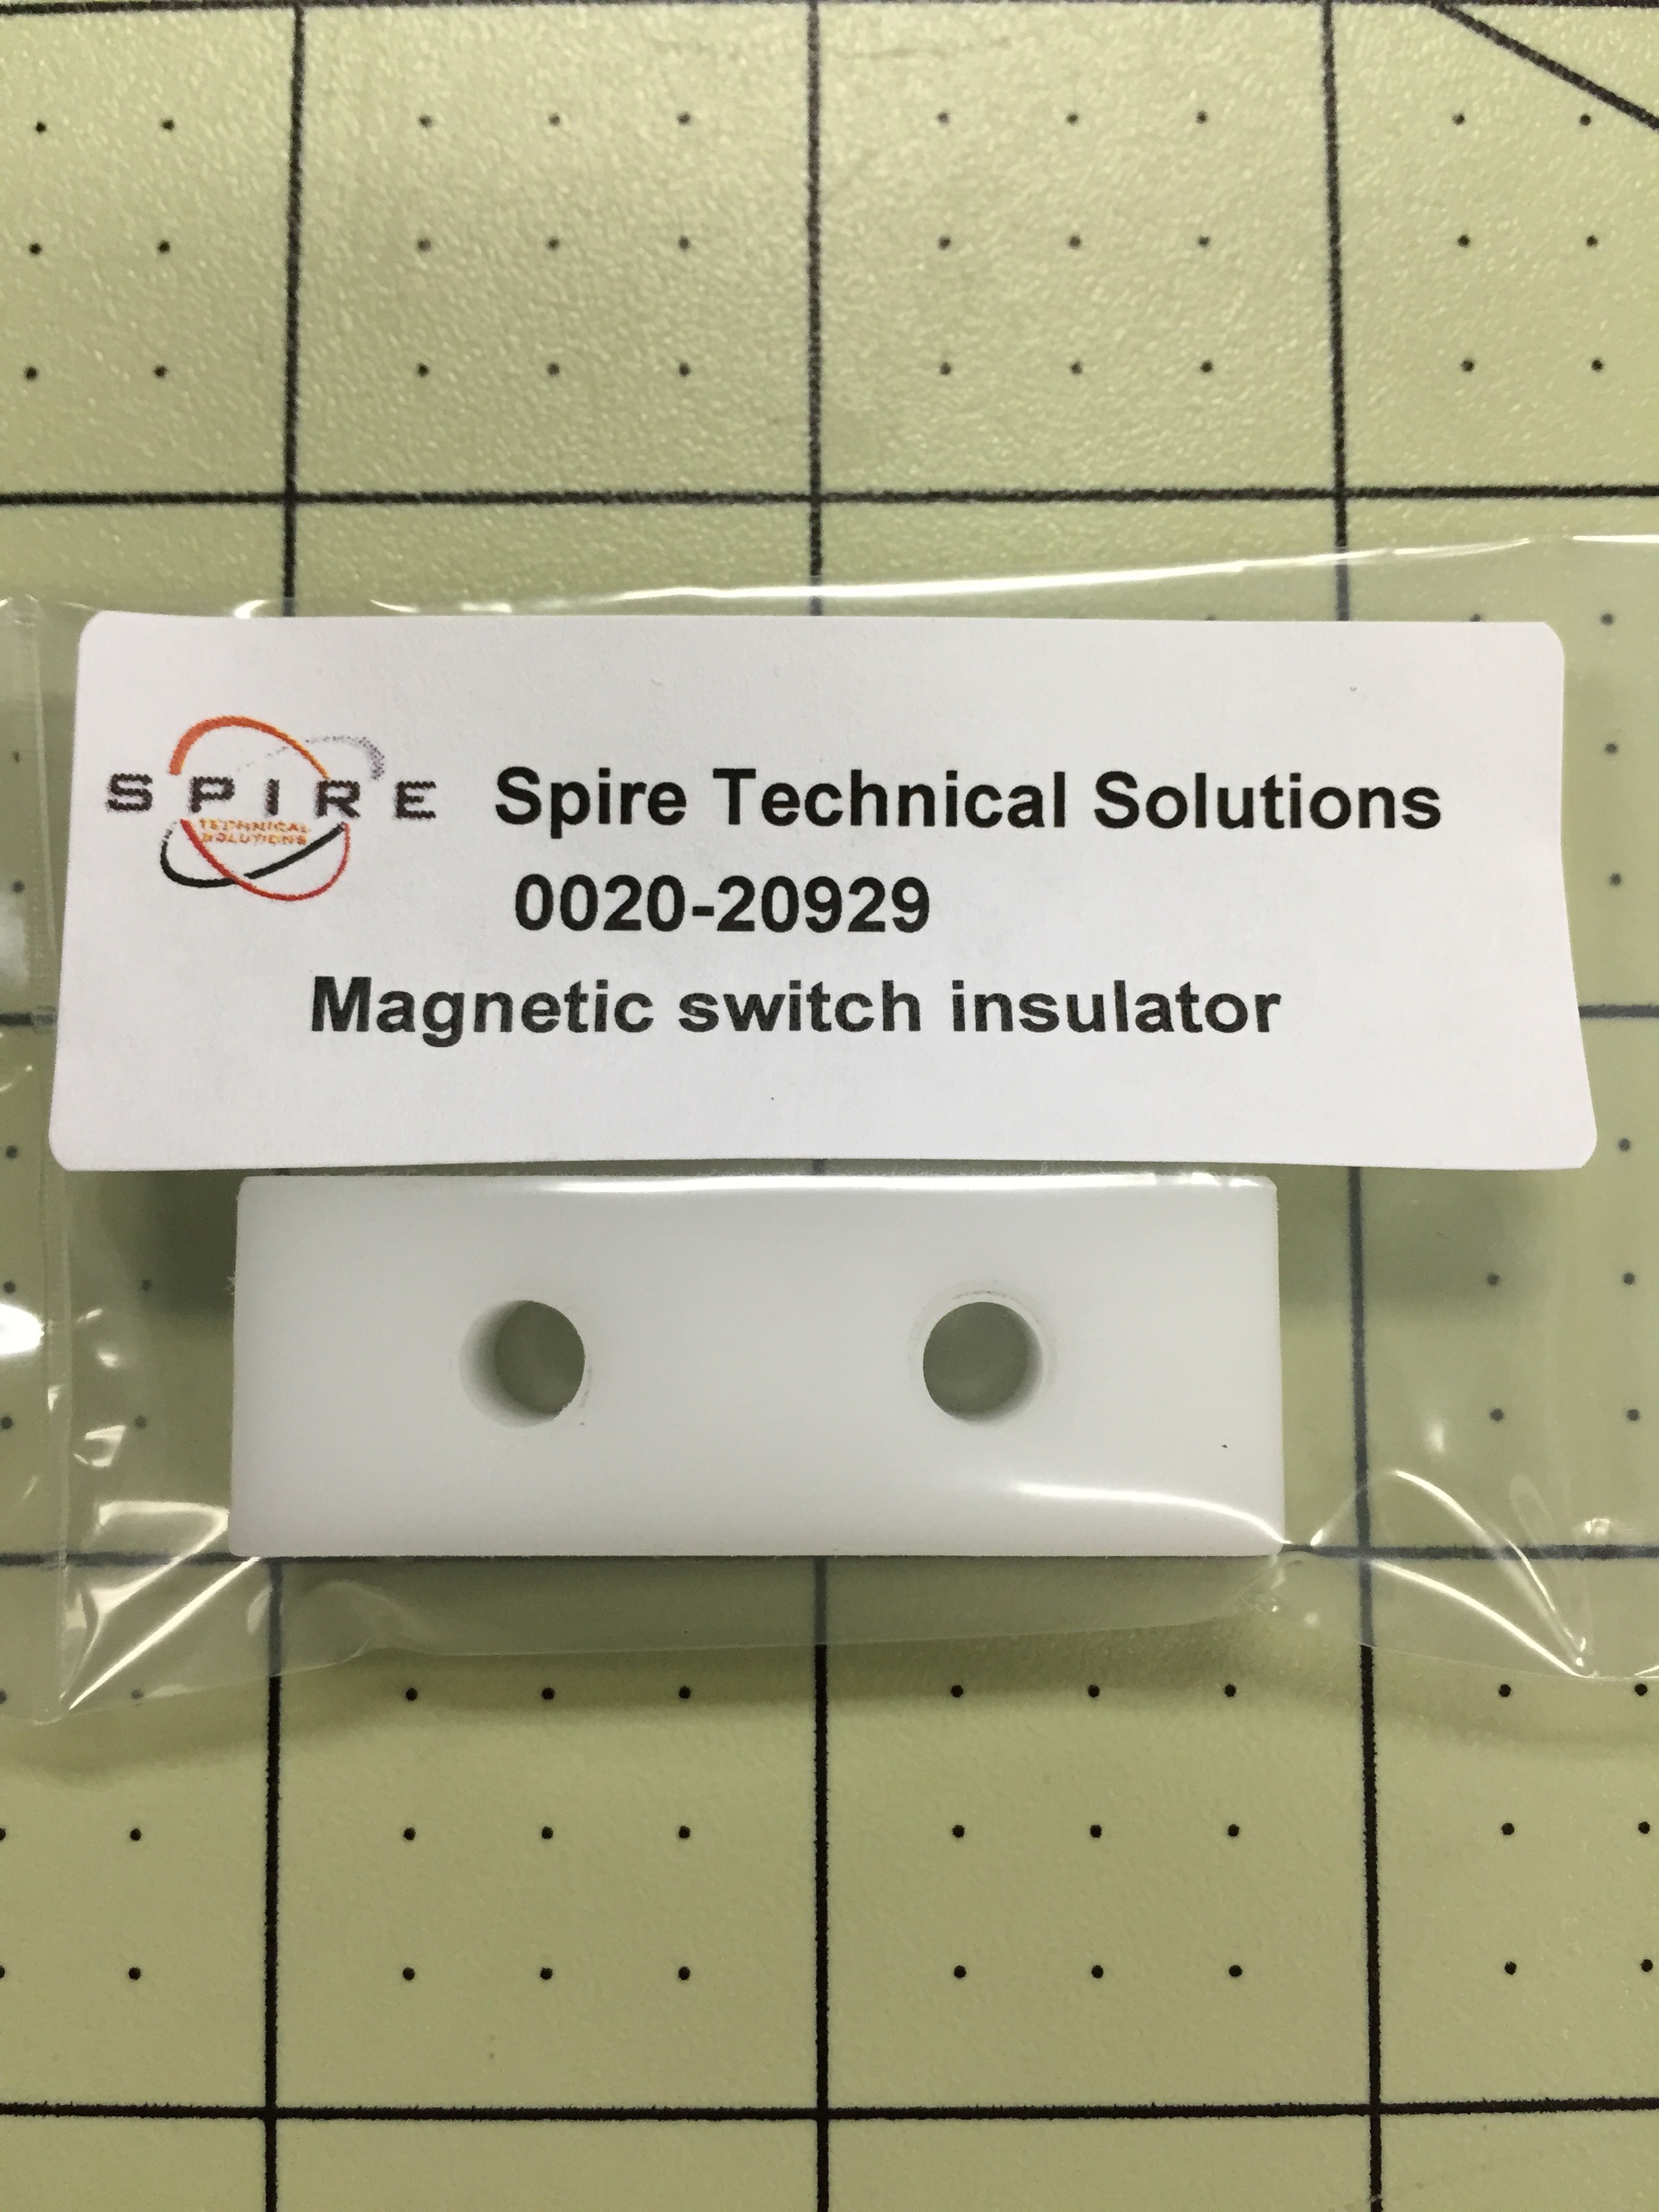 Magnetic switch insulator